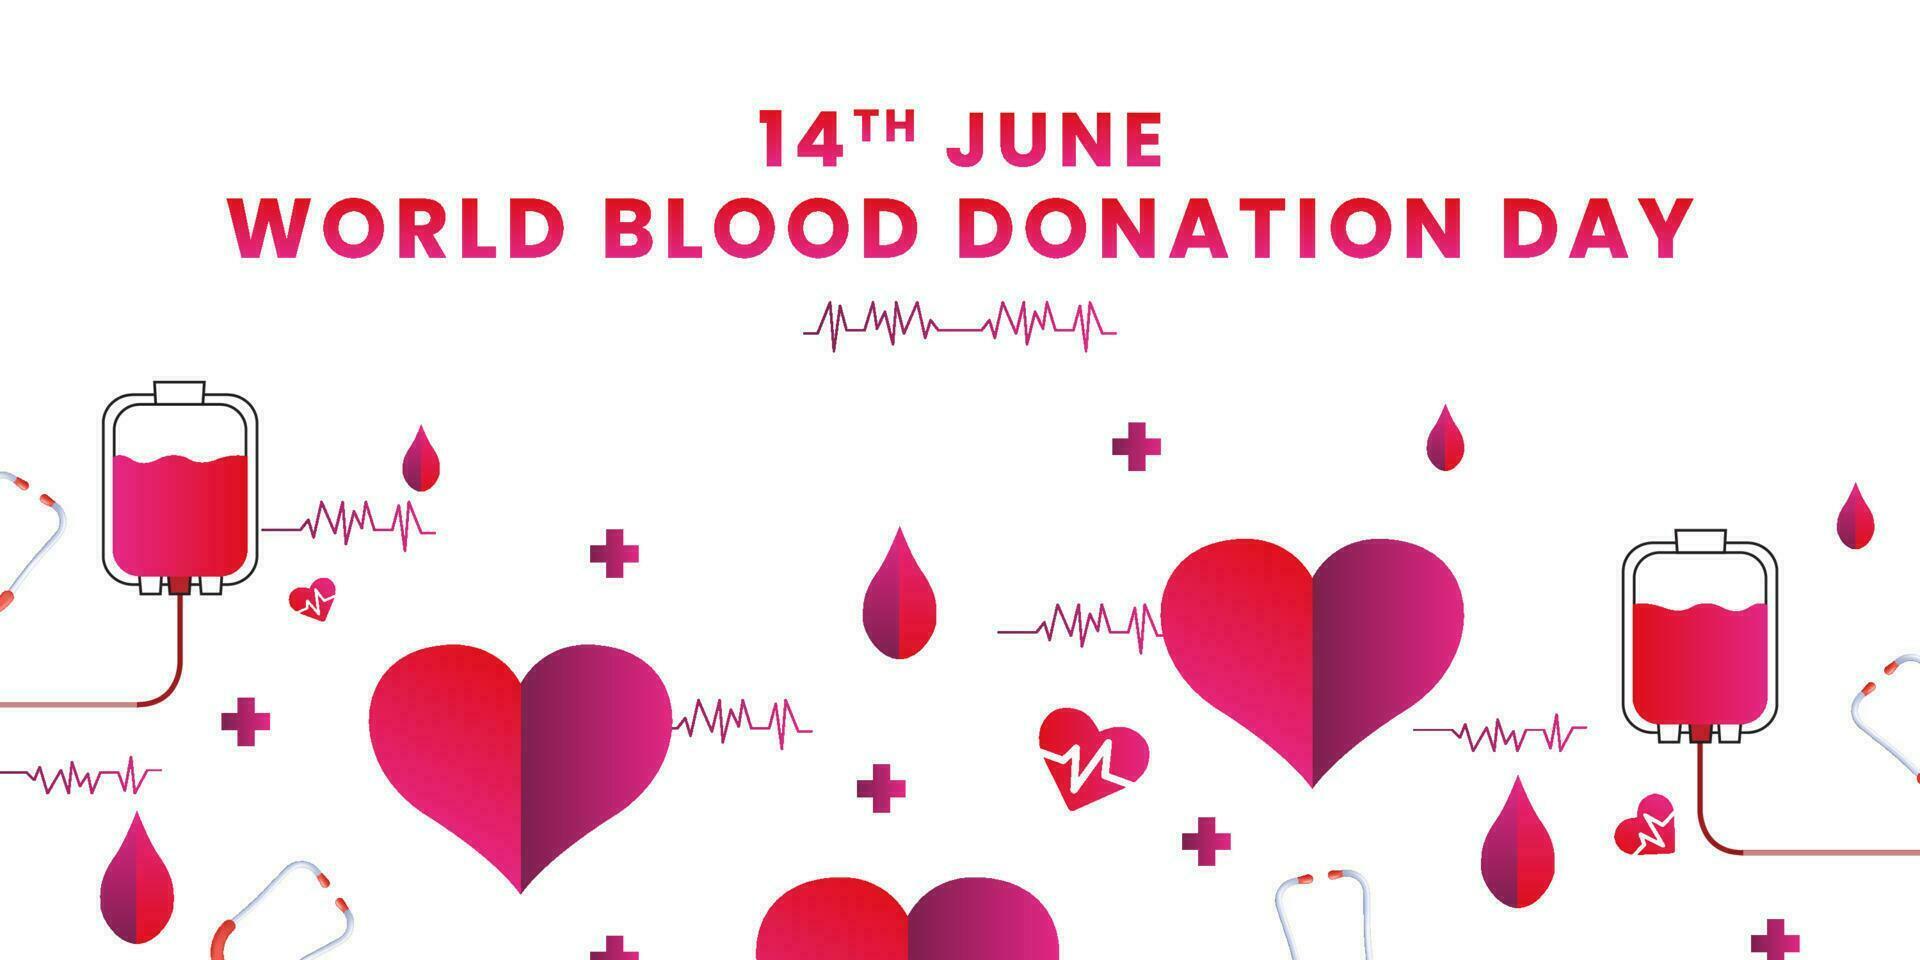 sangre donación ilustración concepto con sangre bolsa. mundo sangre donante día en junio 14 vector